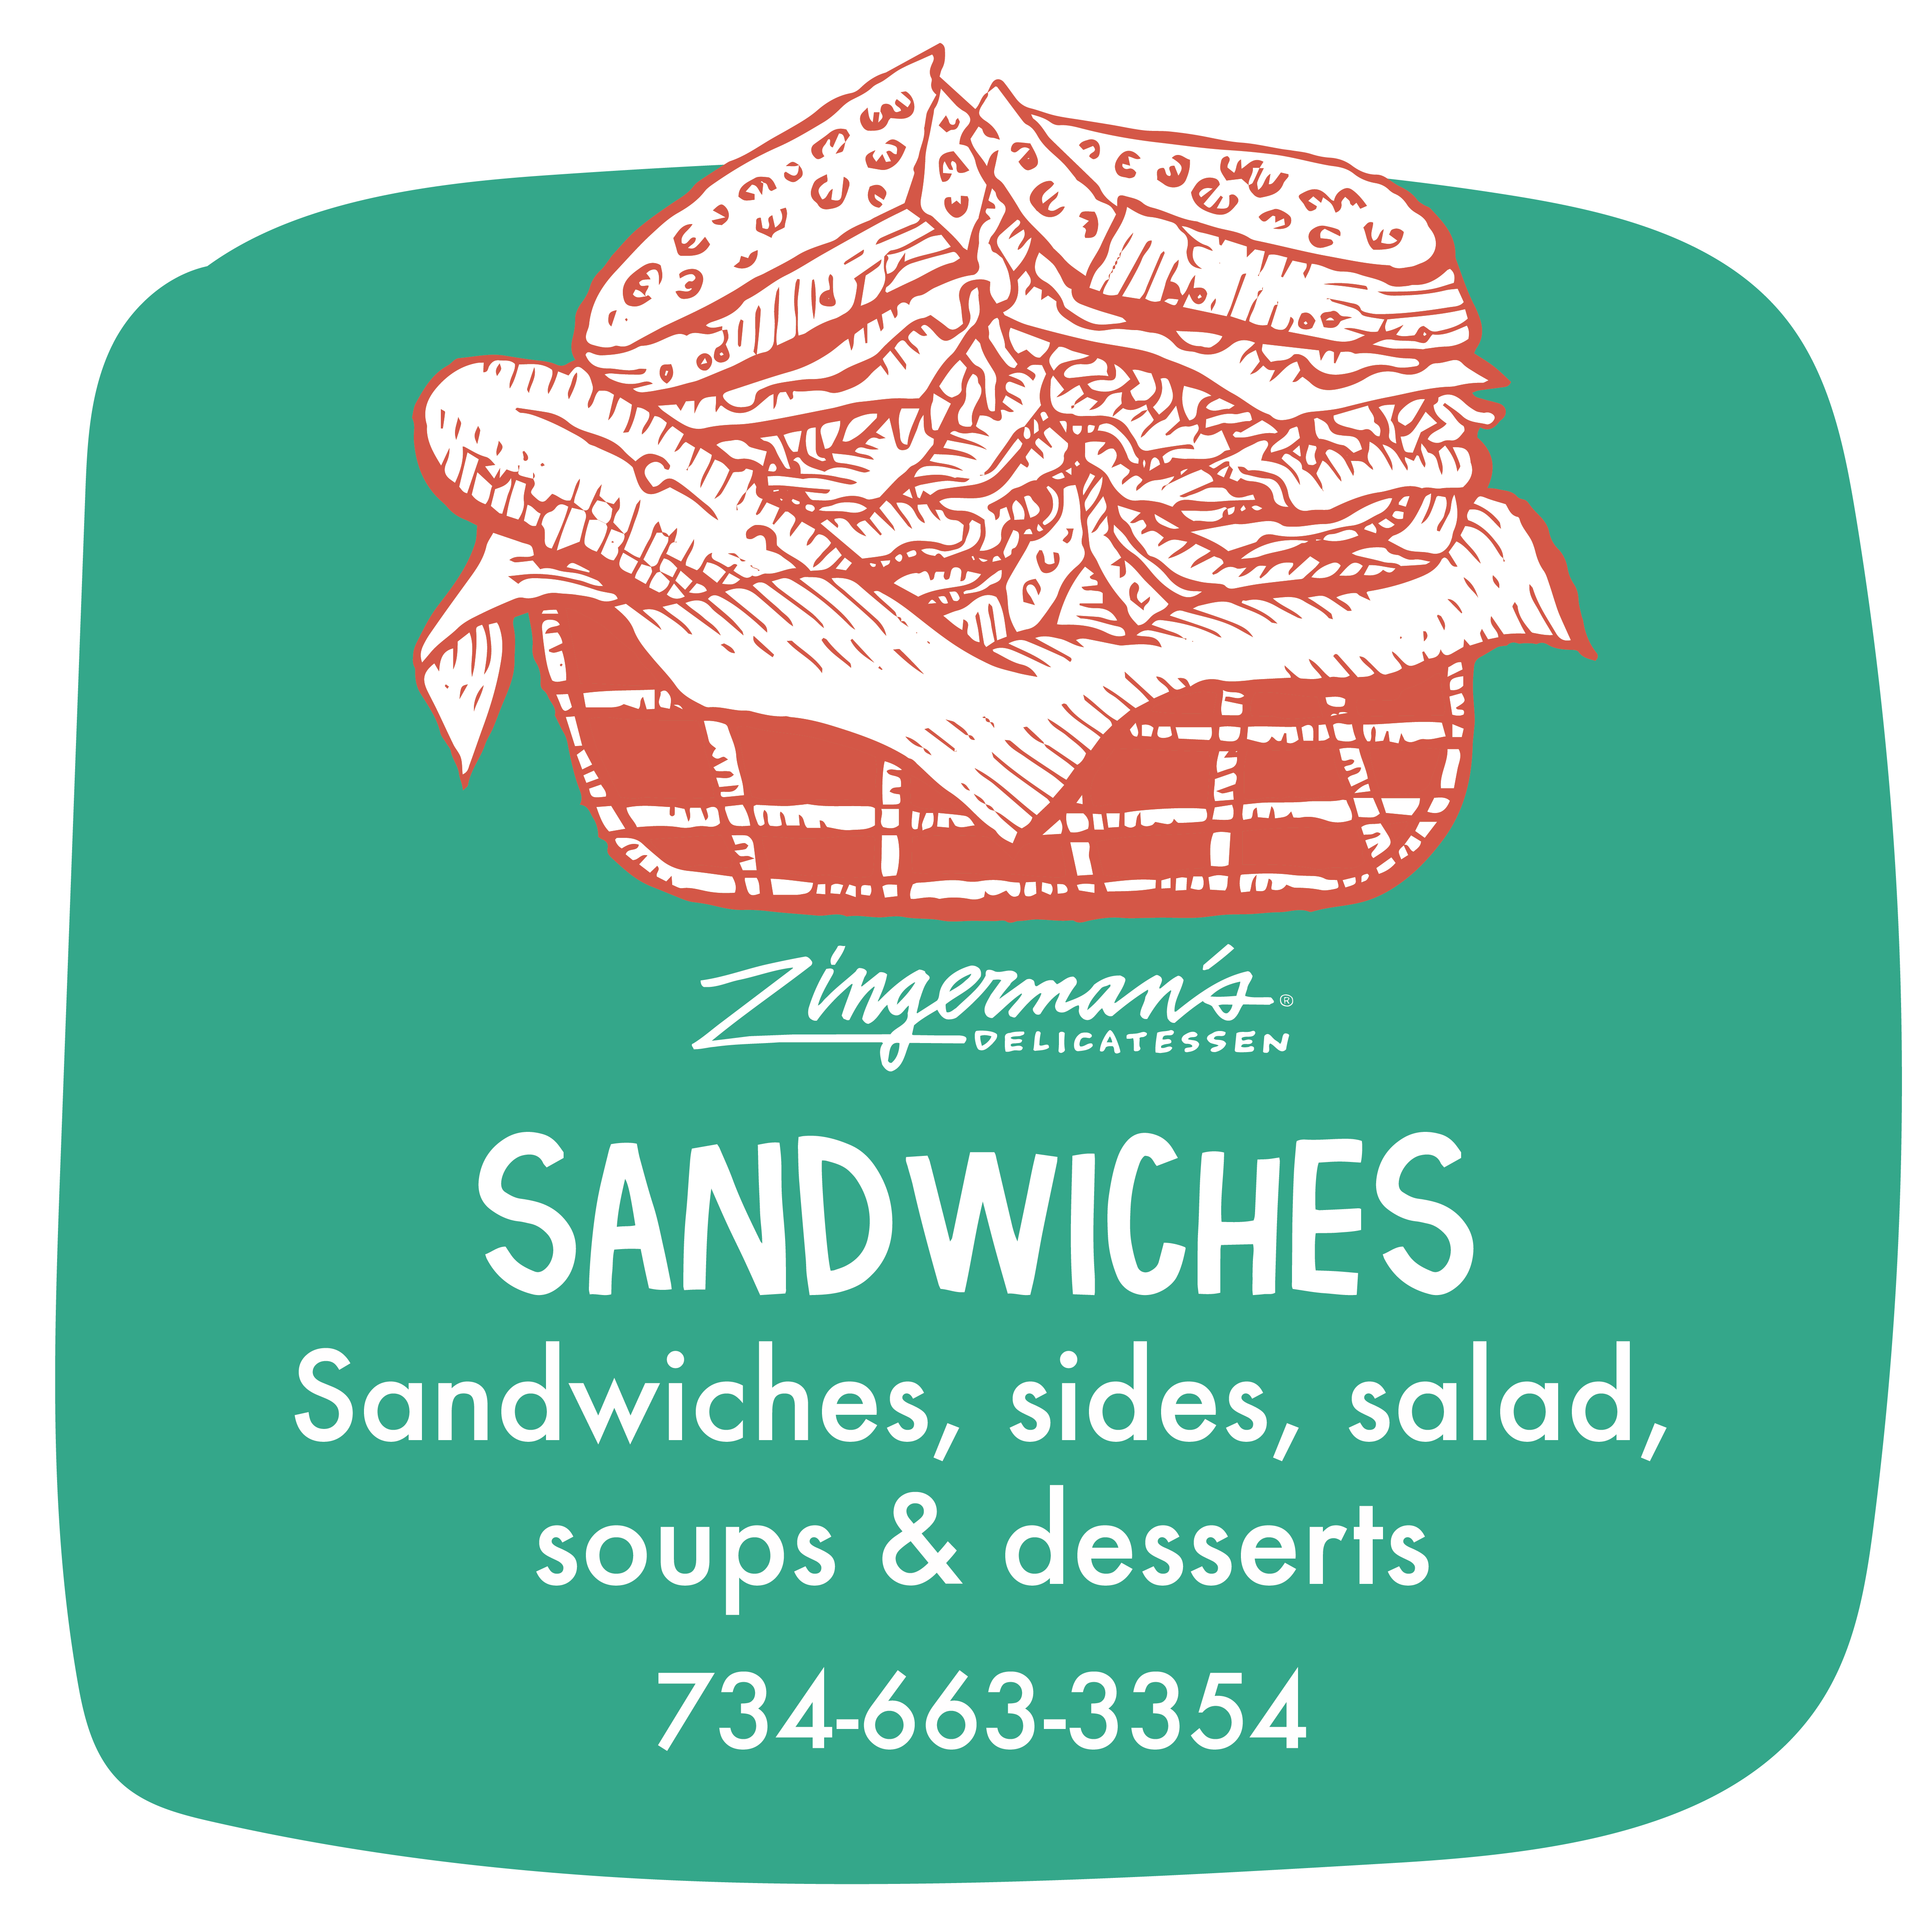 Zingerman's Sandwiches, sides, salad, soups, and desserts